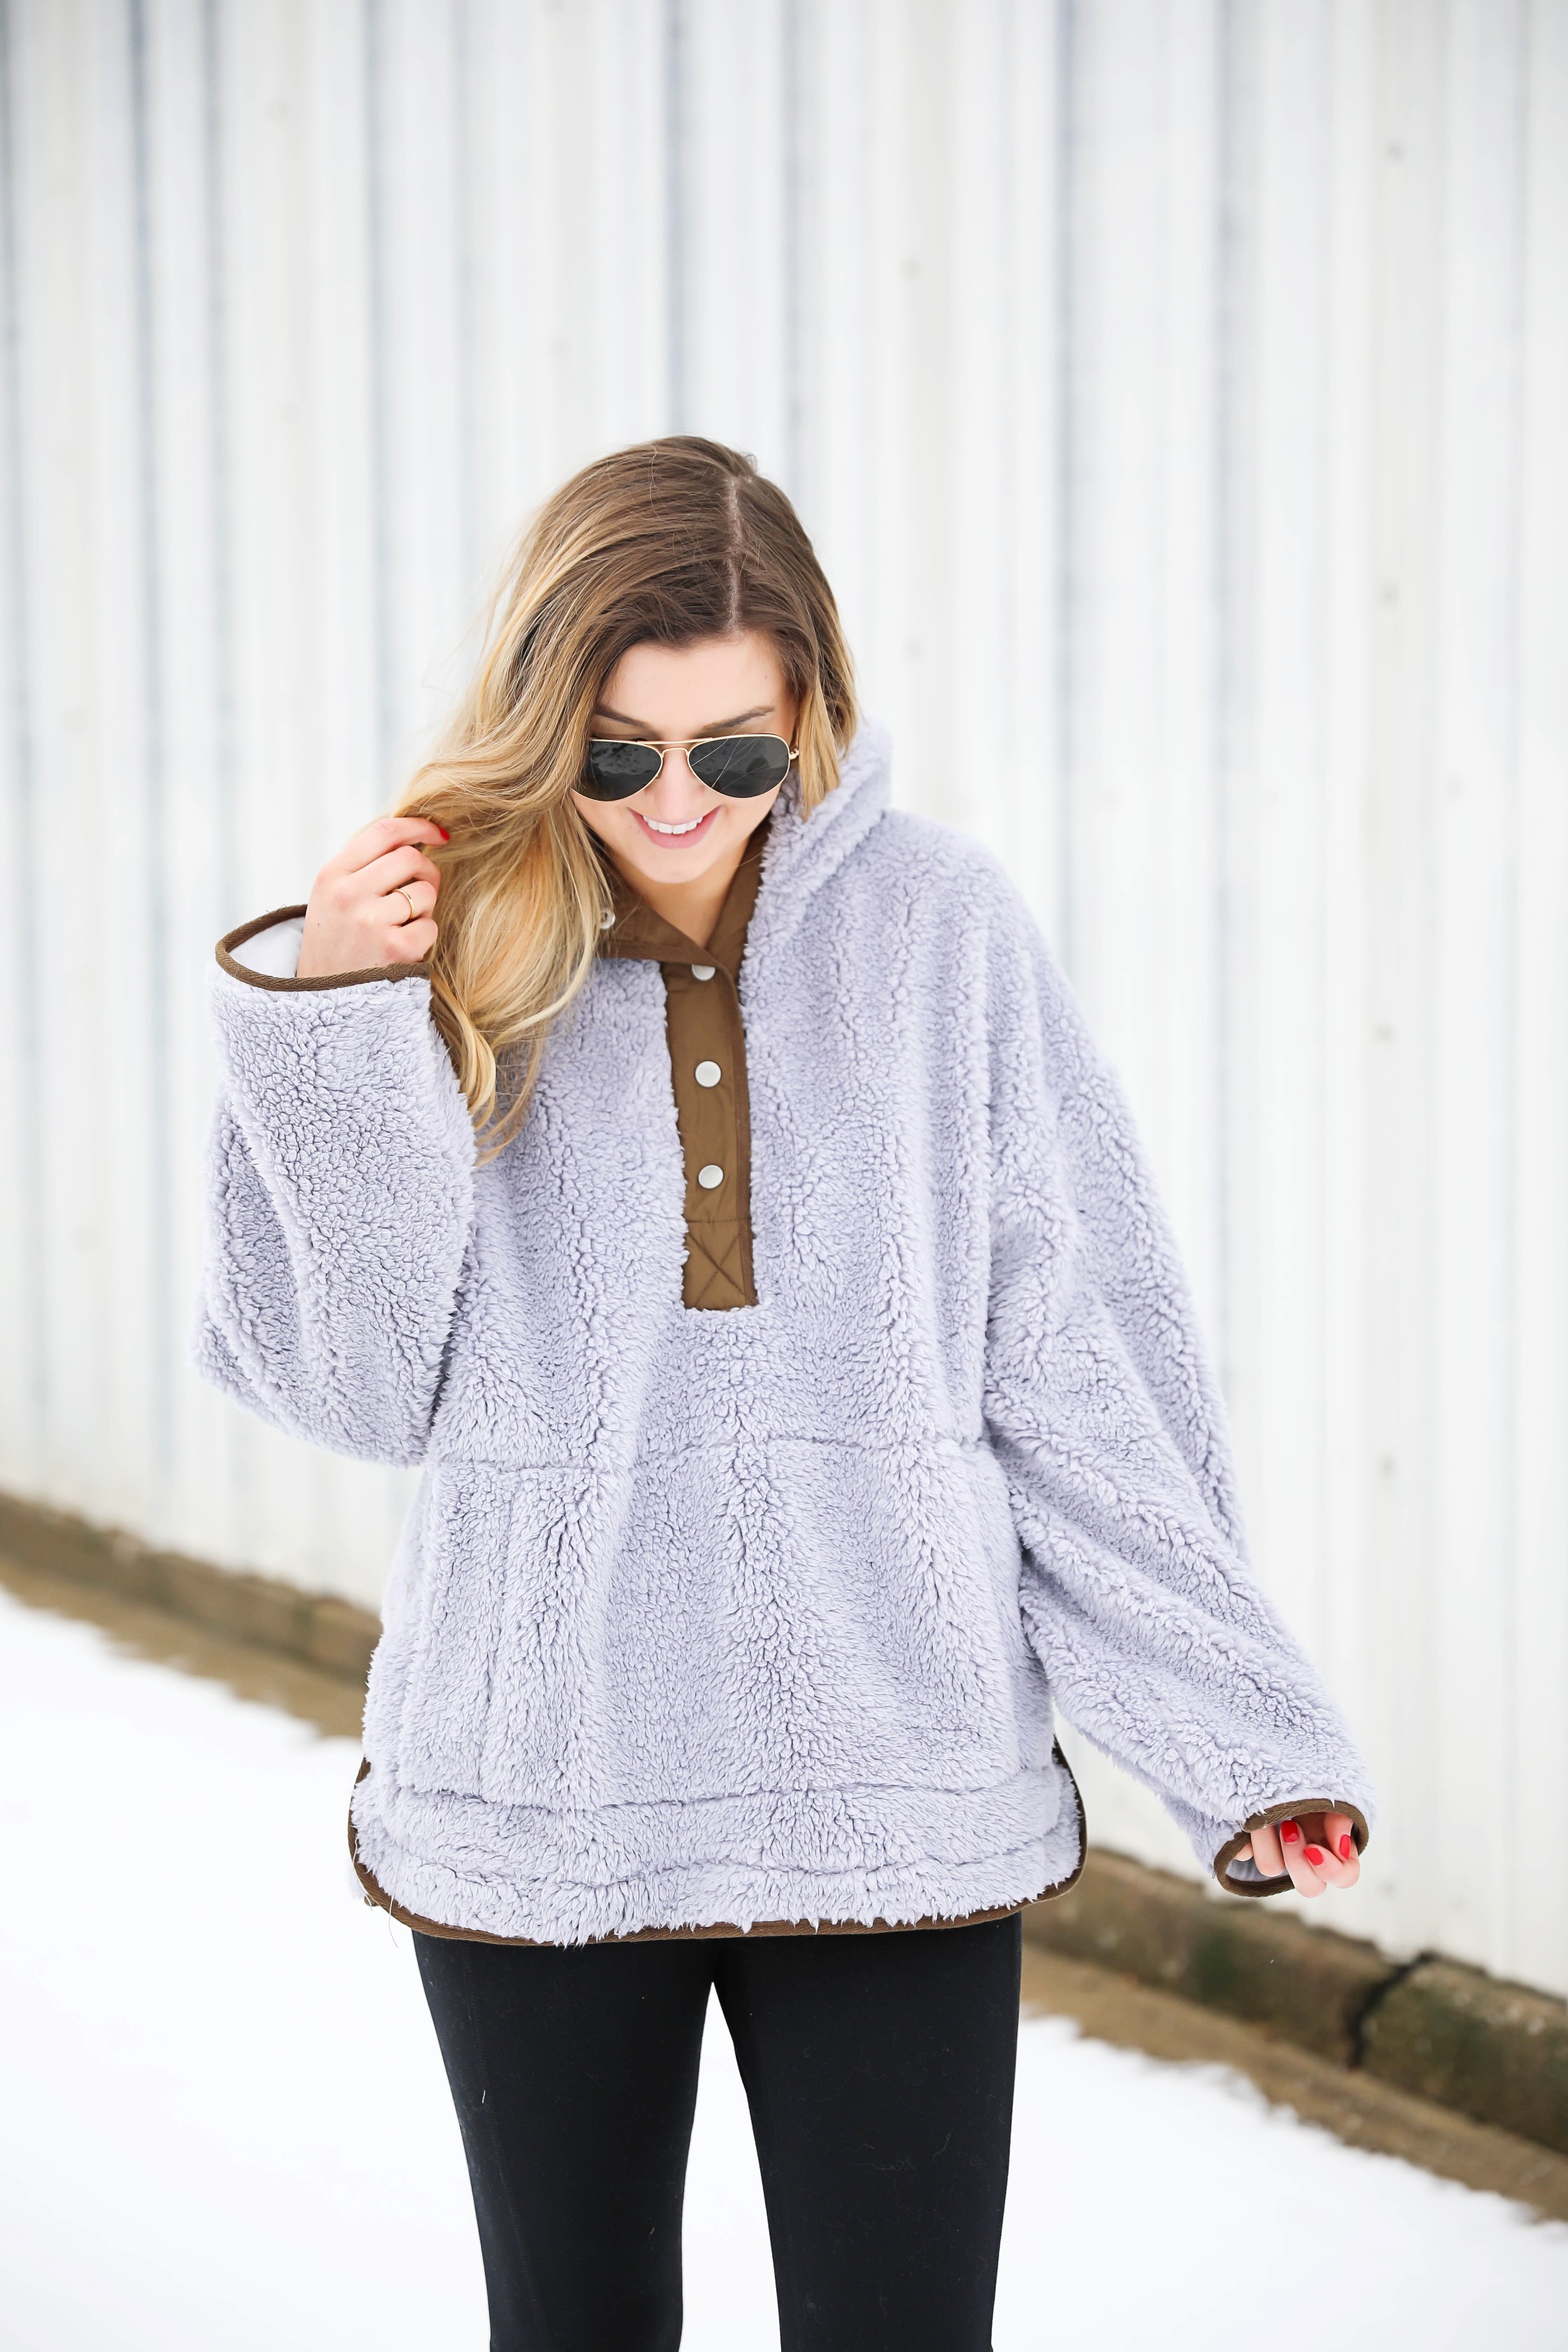 Cozy Sweatshirts are a Necessity | OOTD + Roundup of Sweatshirts You ...